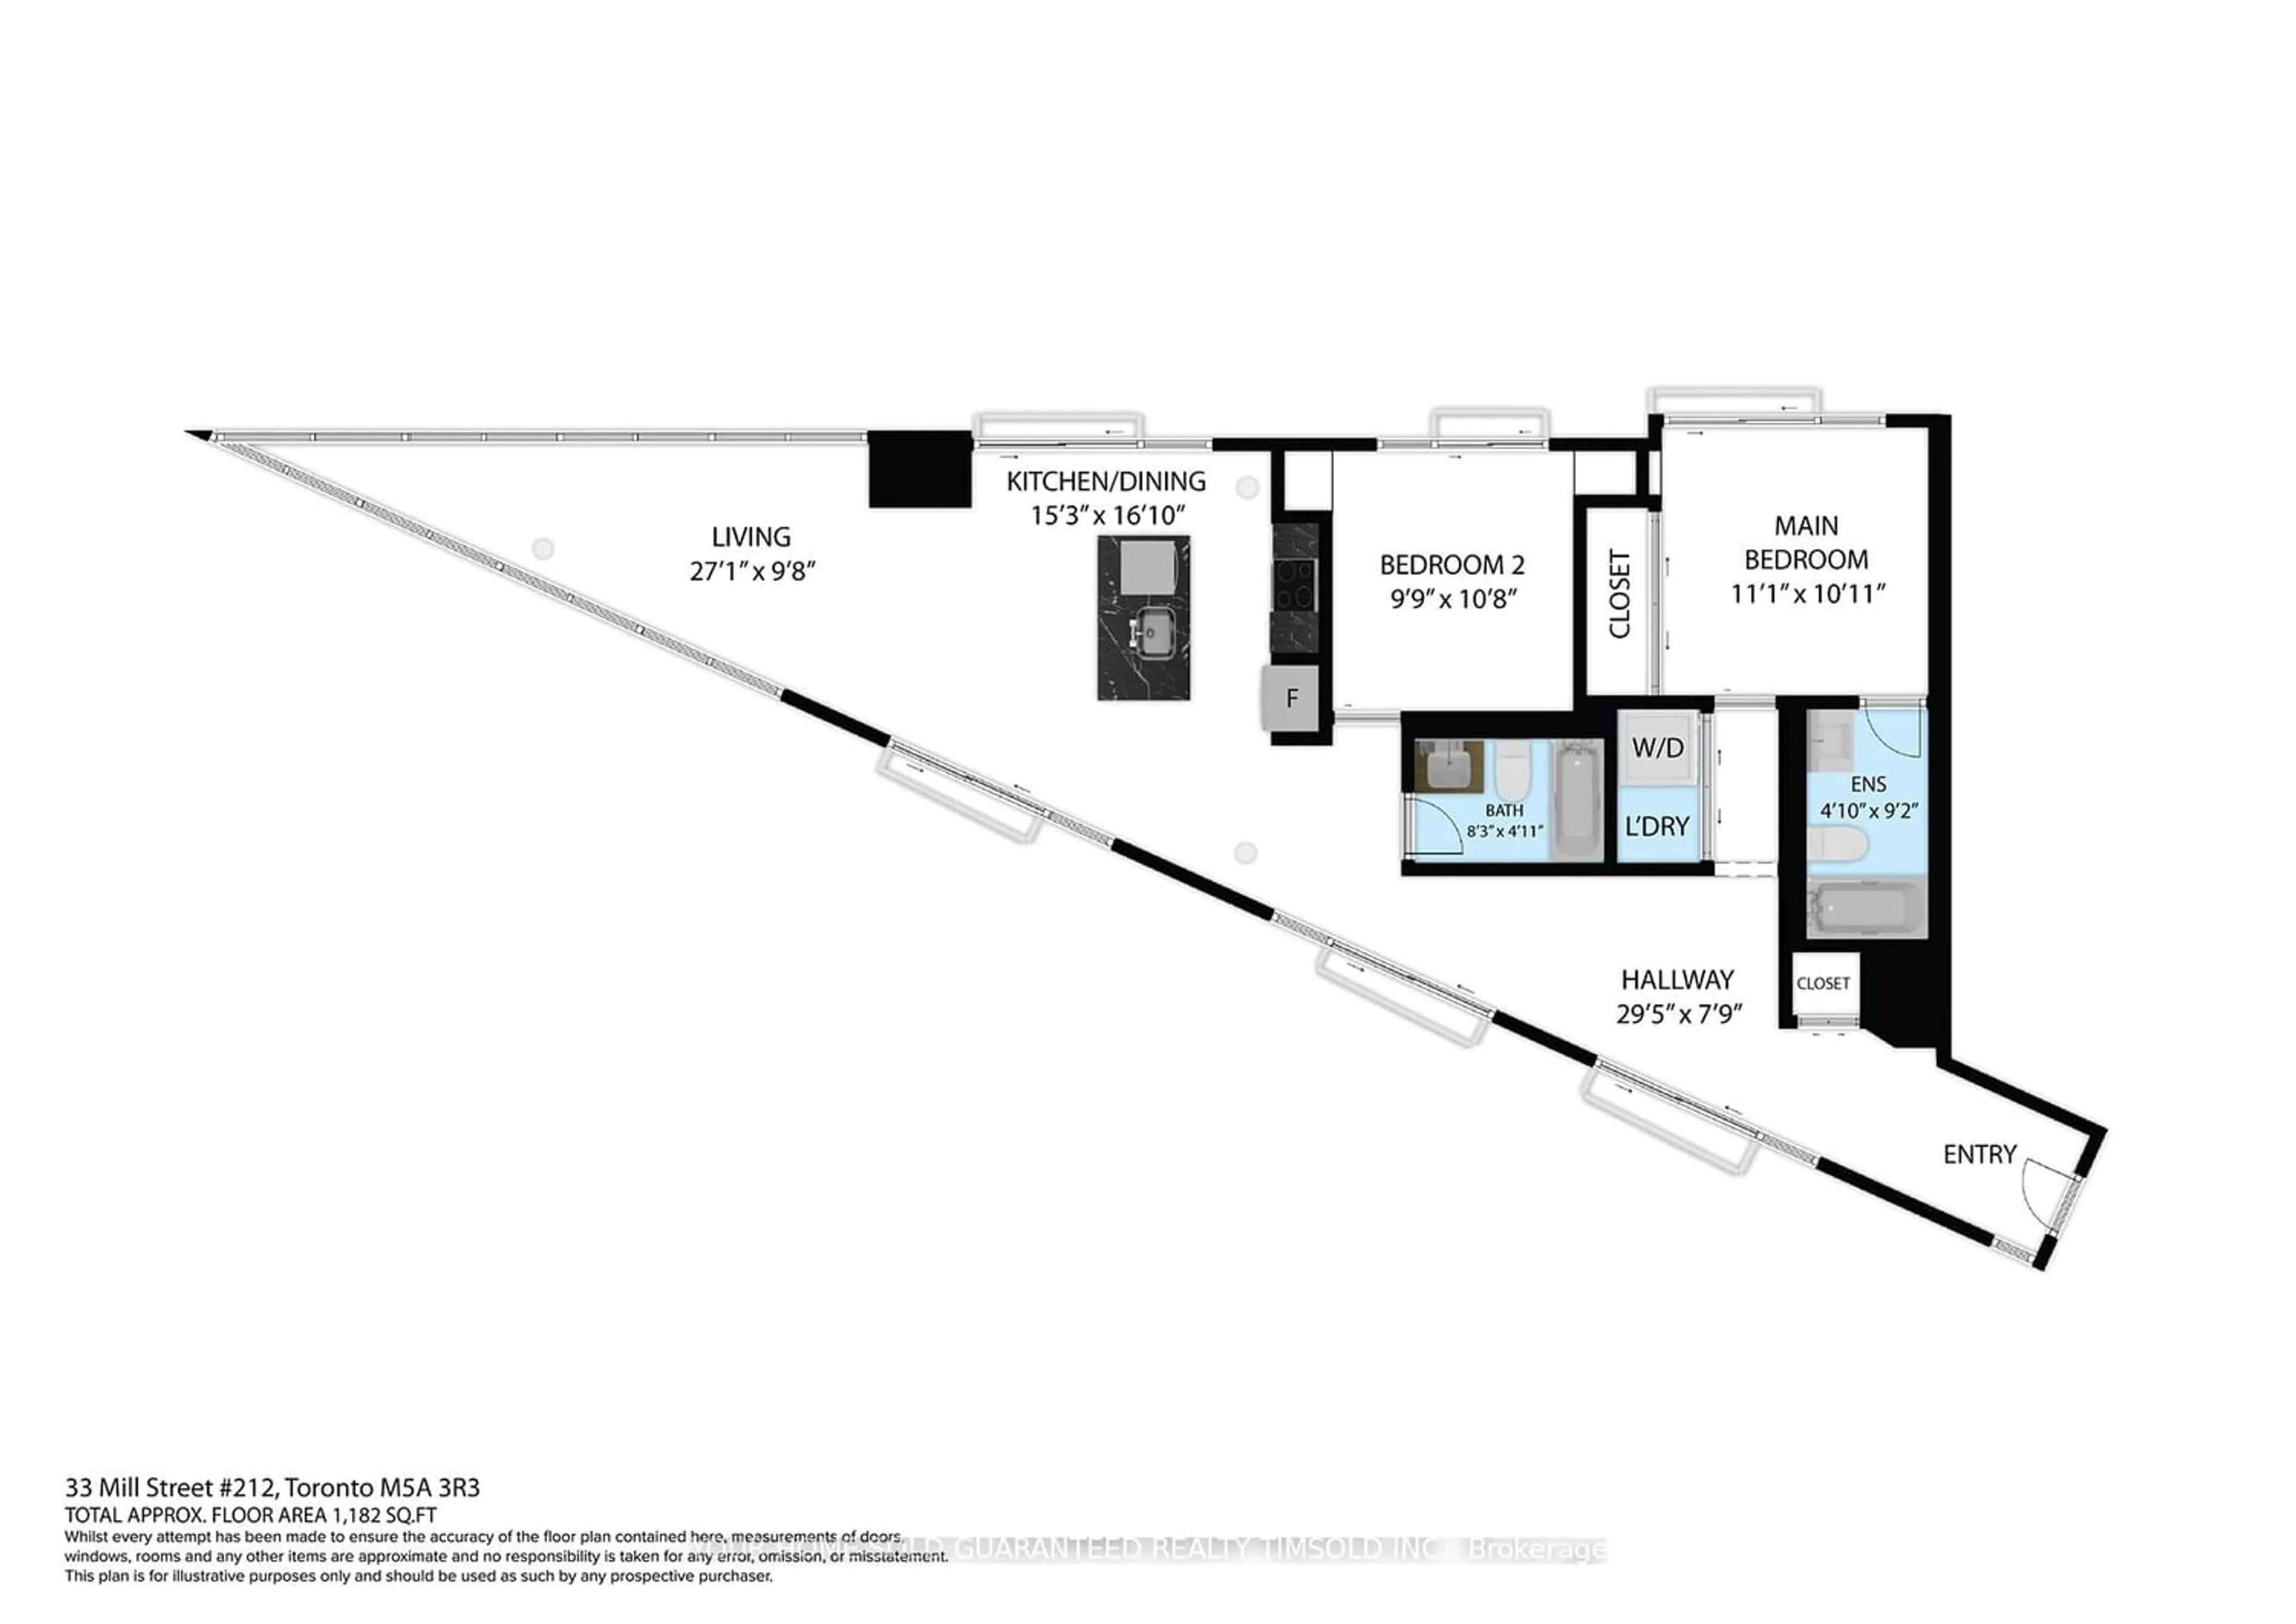 Floor plan for 33 Mill St #212, Toronto Ontario M5A 3R3